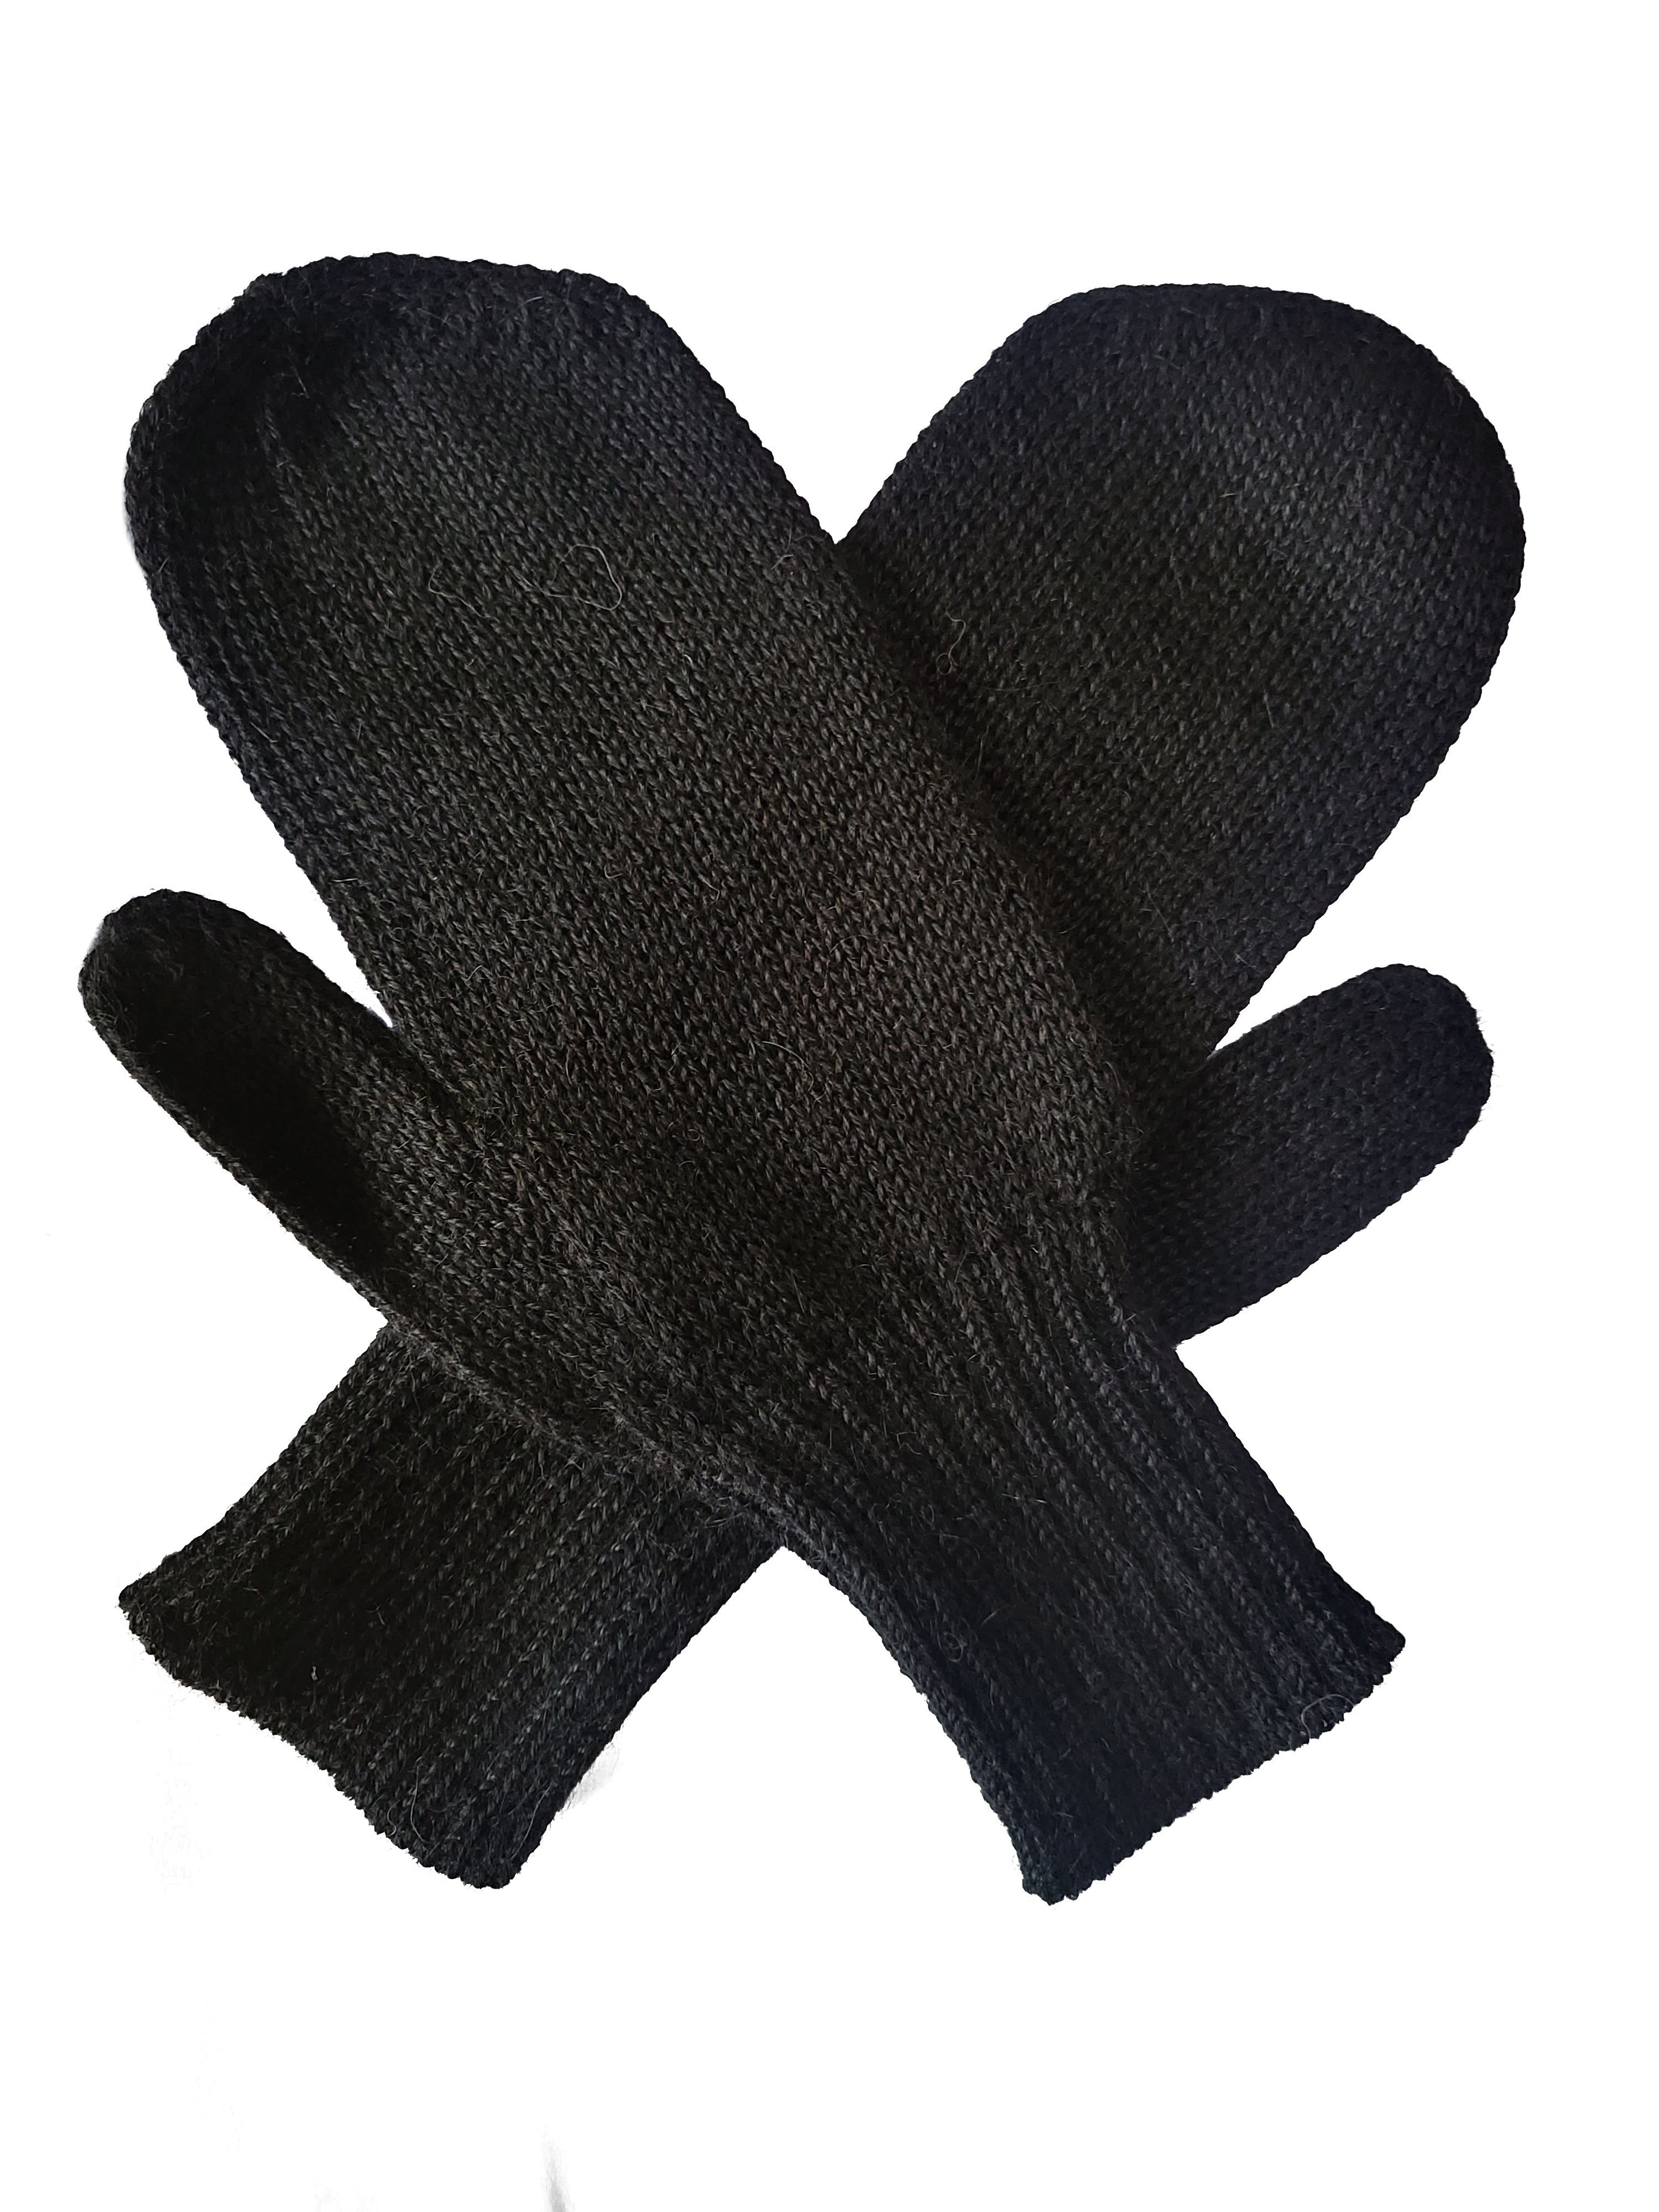 Handschuhe Posh Damen schwarz aus Pugnoguanti Alpaka Alpakawolle Herren 100% Gear Fäustlinge